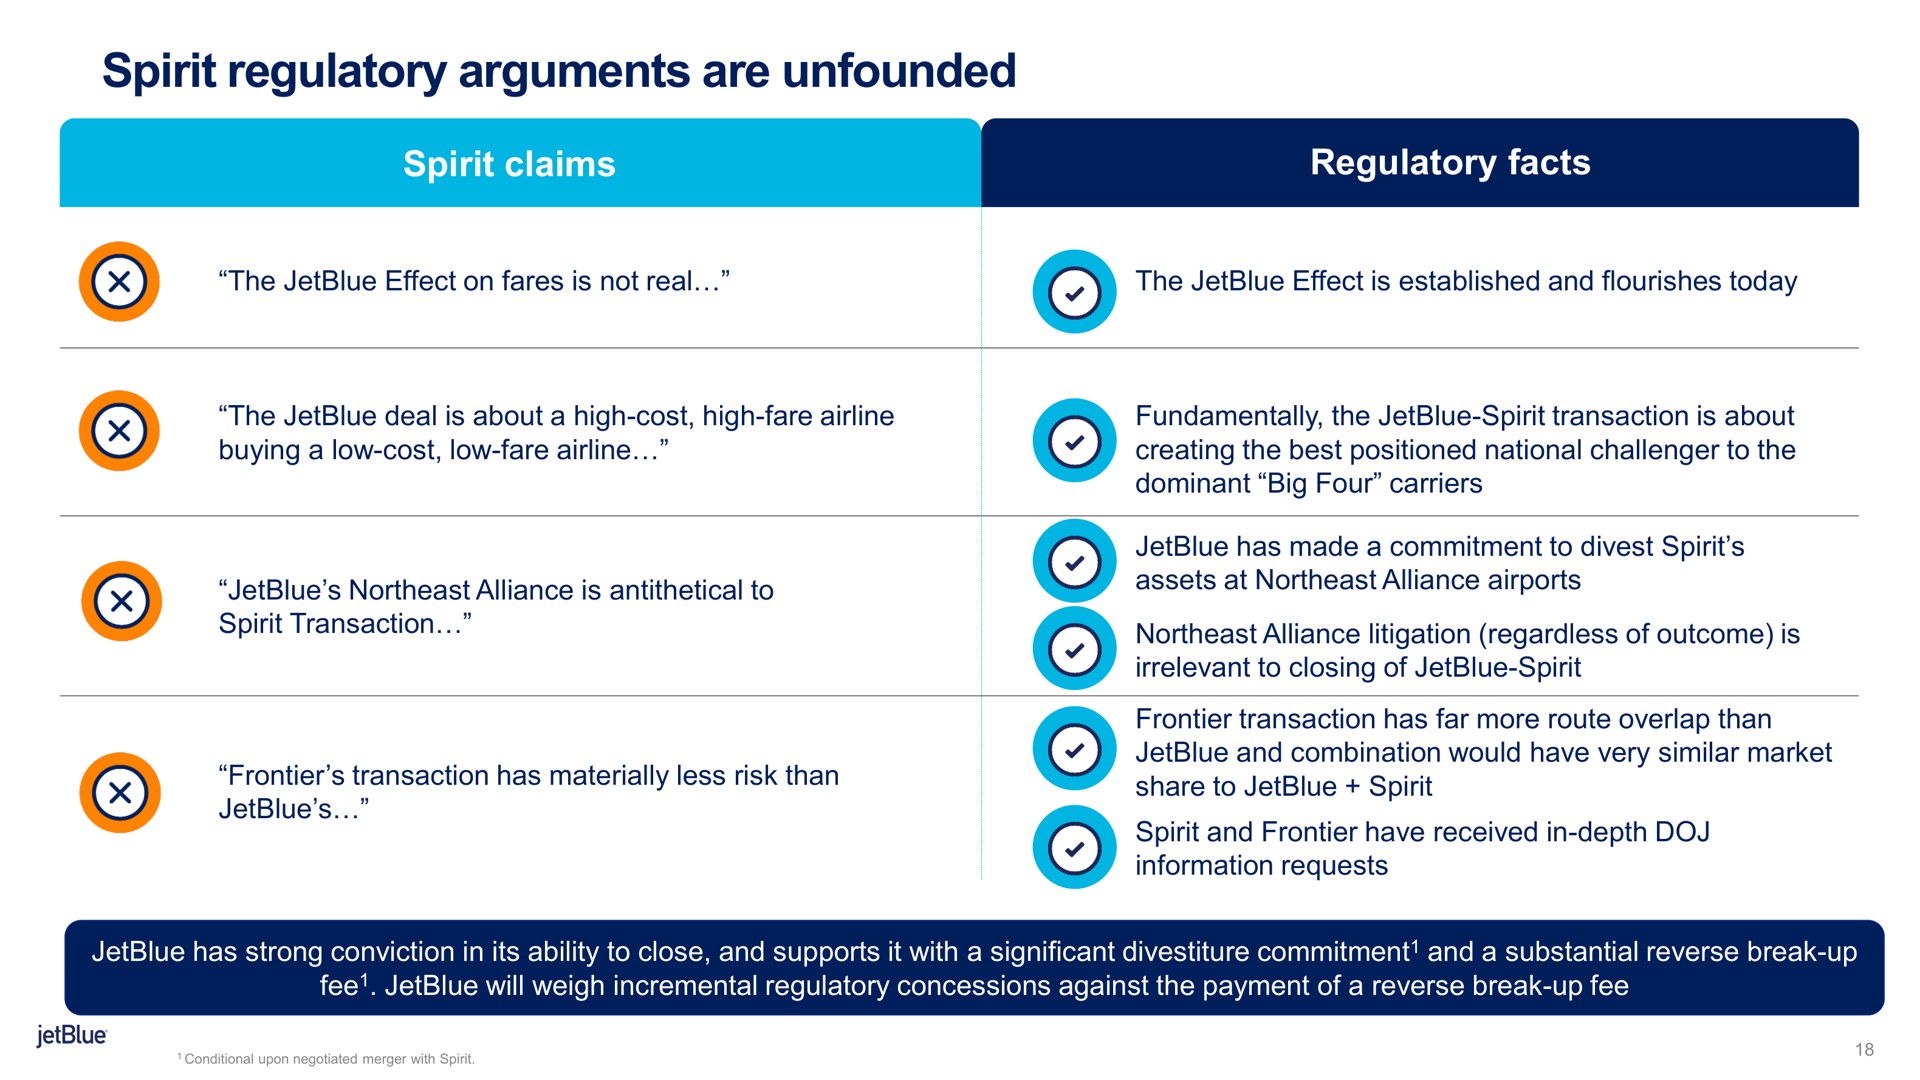 spirit regulatory arguments are unfounded | jetBlue